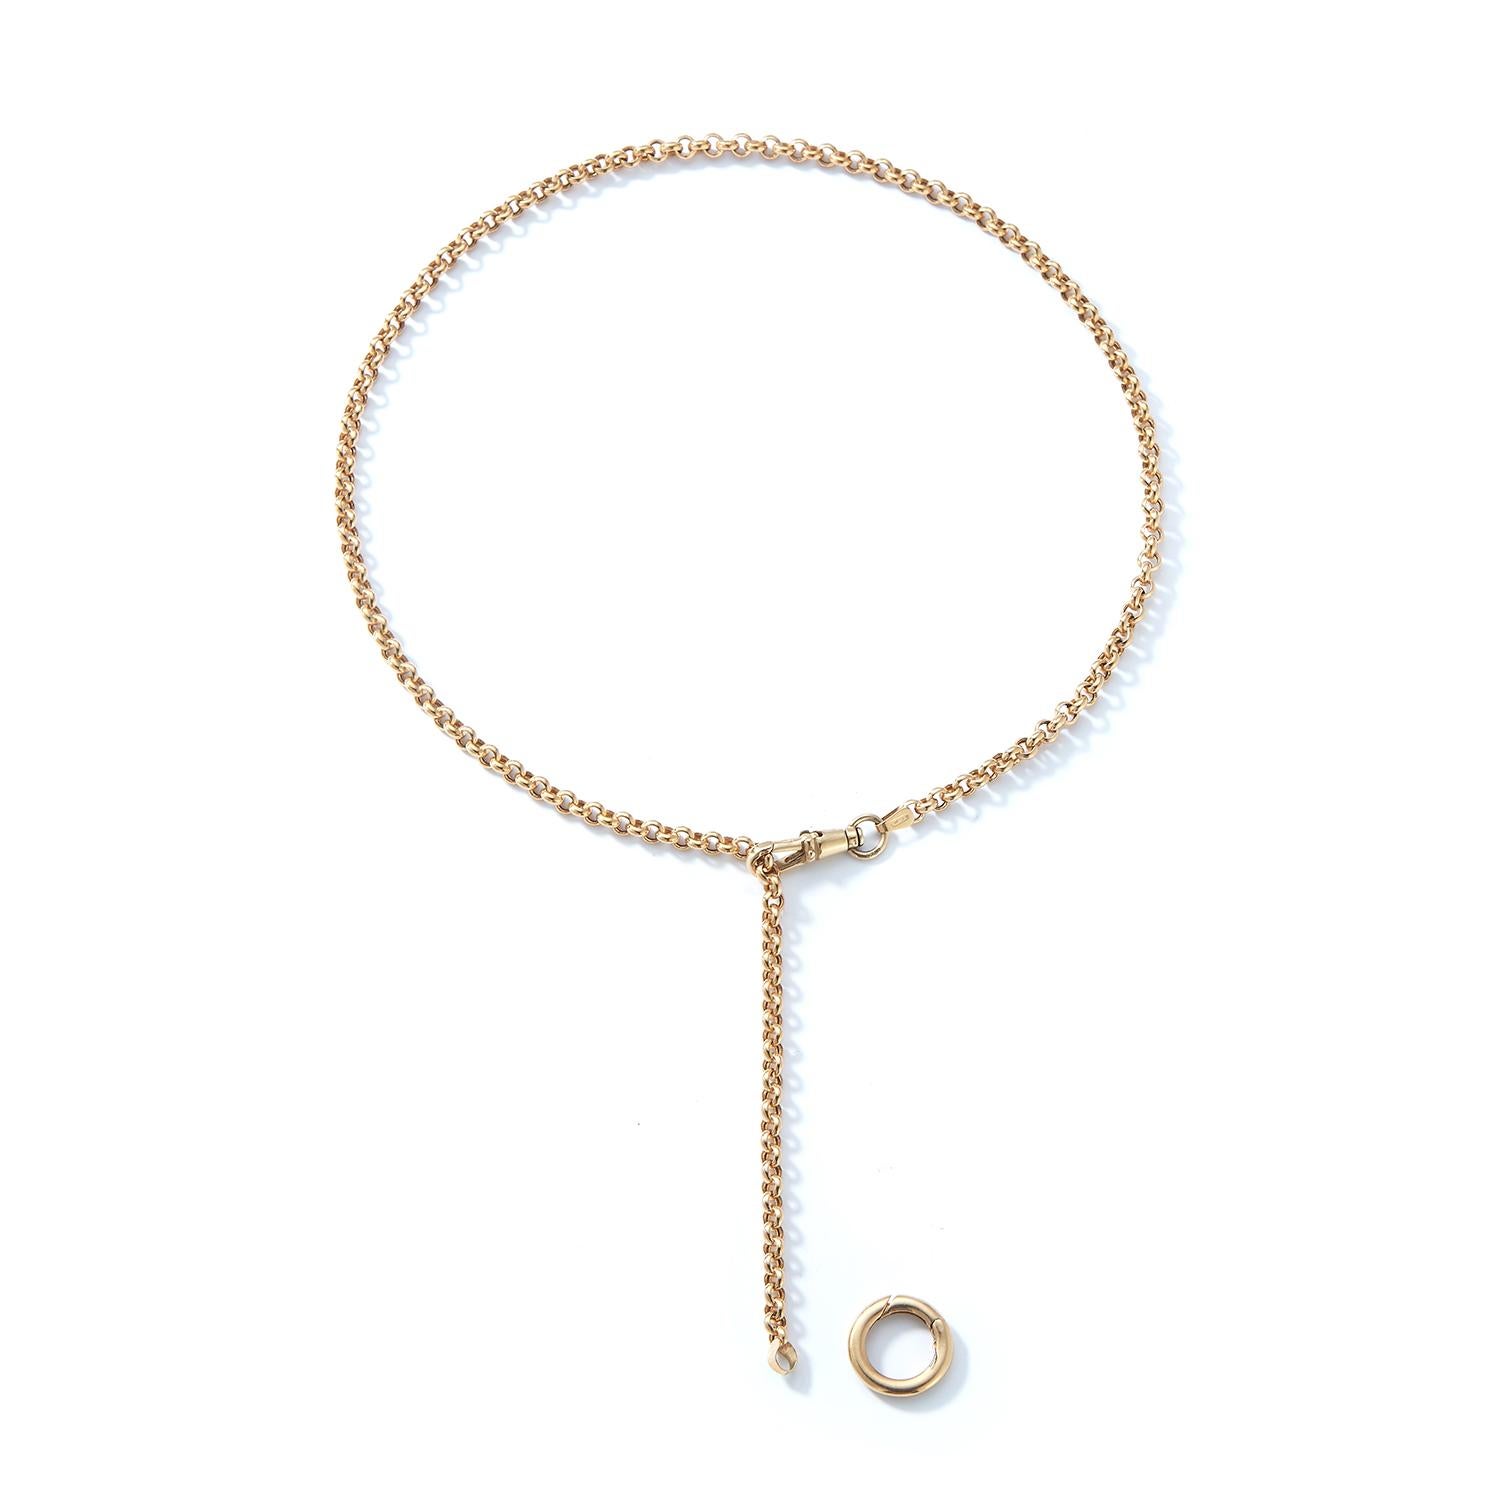 belcher chain with dog clip